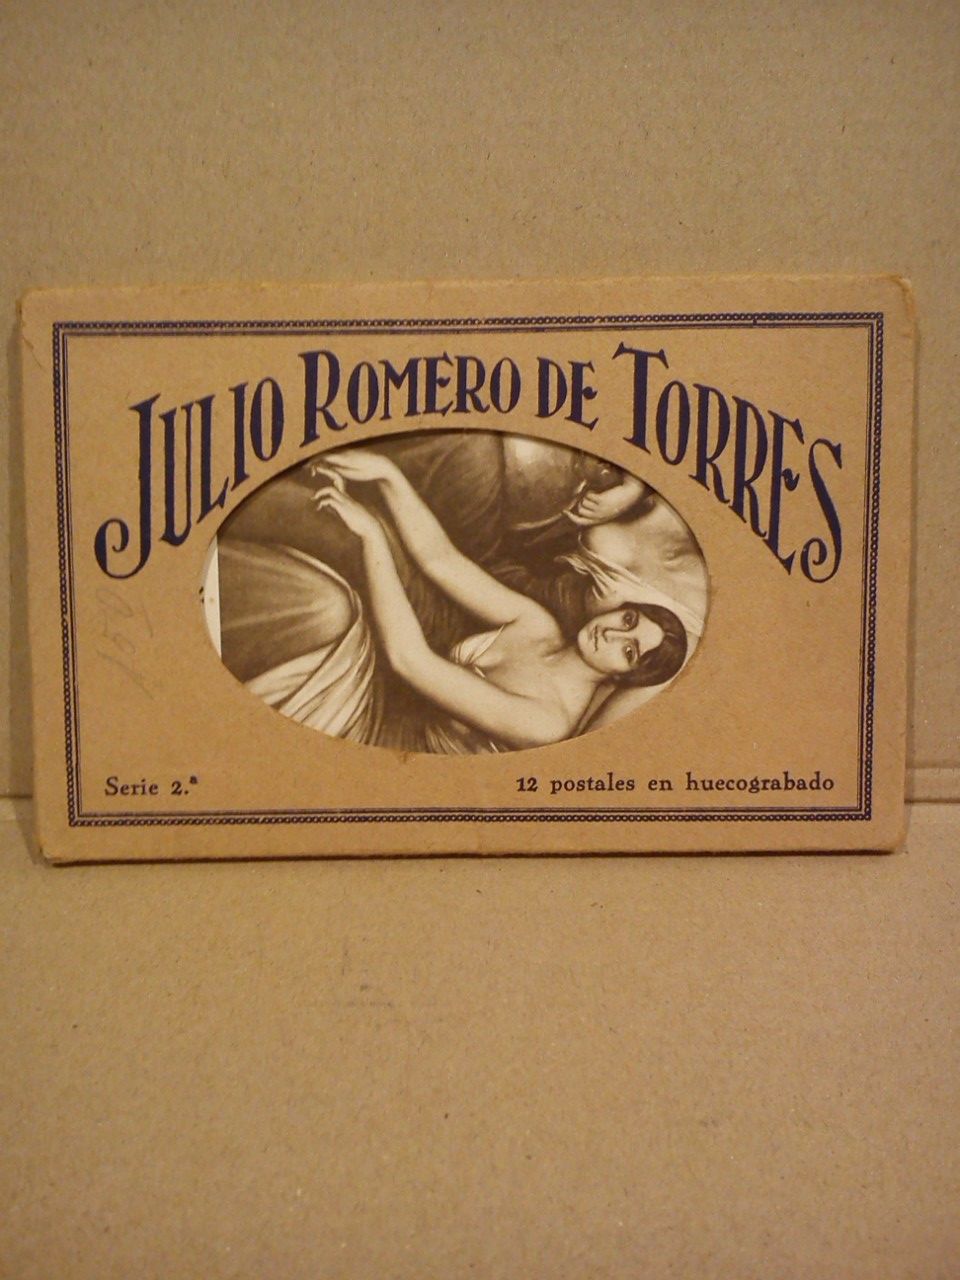 ROMERO DE TORRES, Julio - 12 postales en huecograbado. Serie 2 [con pinturas del famoso artista cordobs]